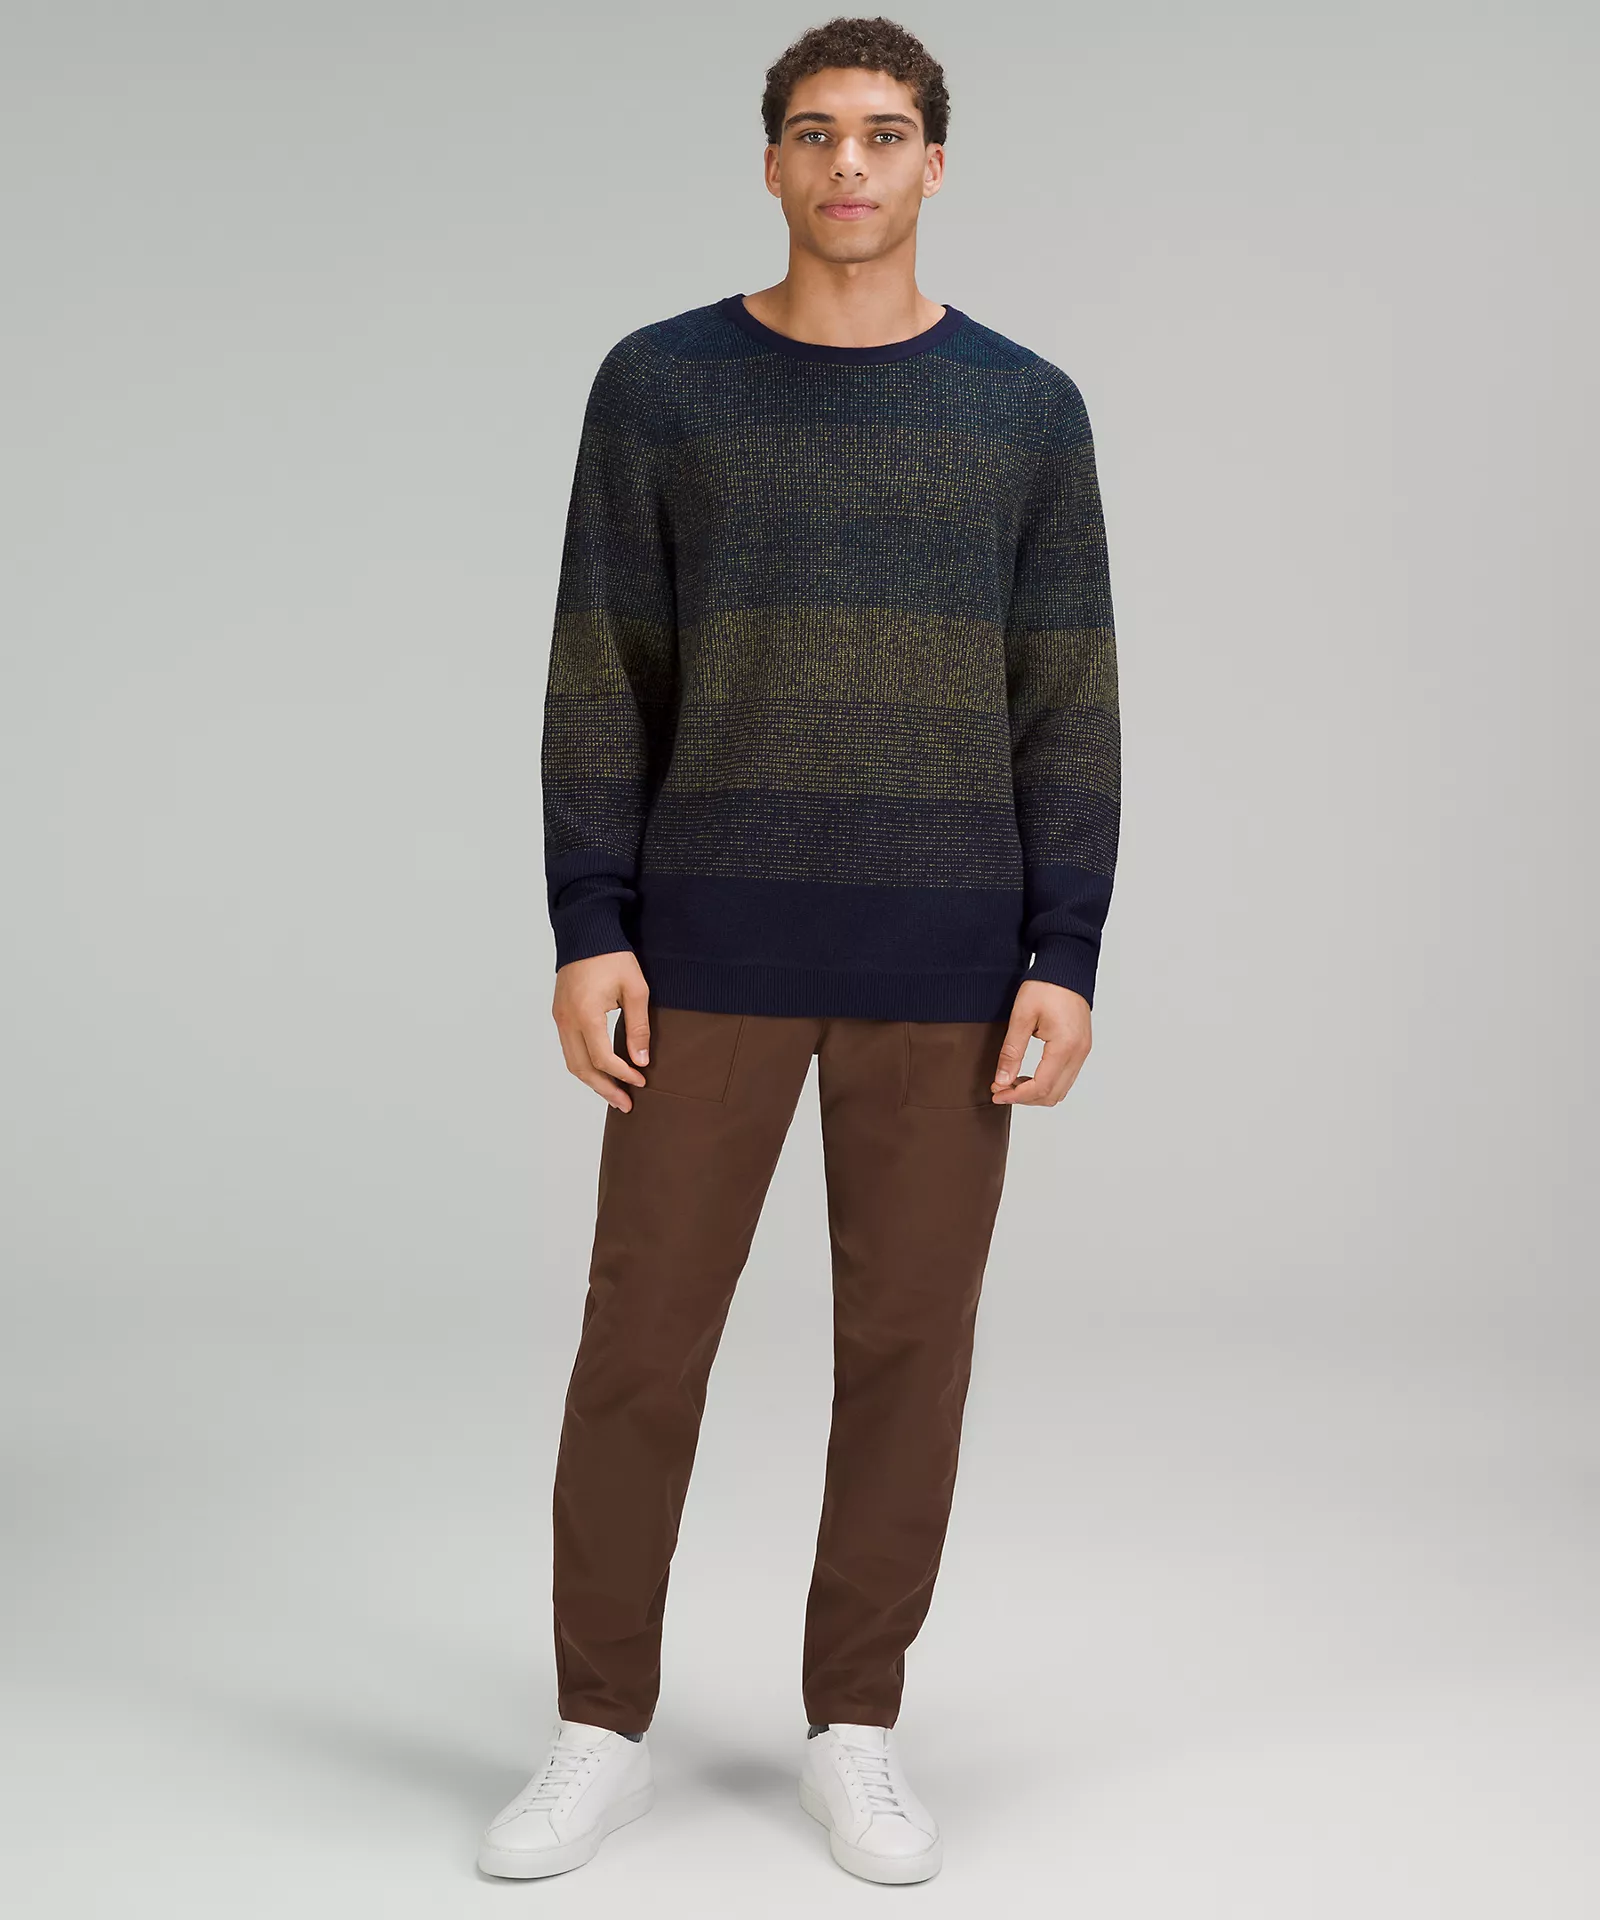 shop.lululemon.com | Textured Knit Crewneck Sweater